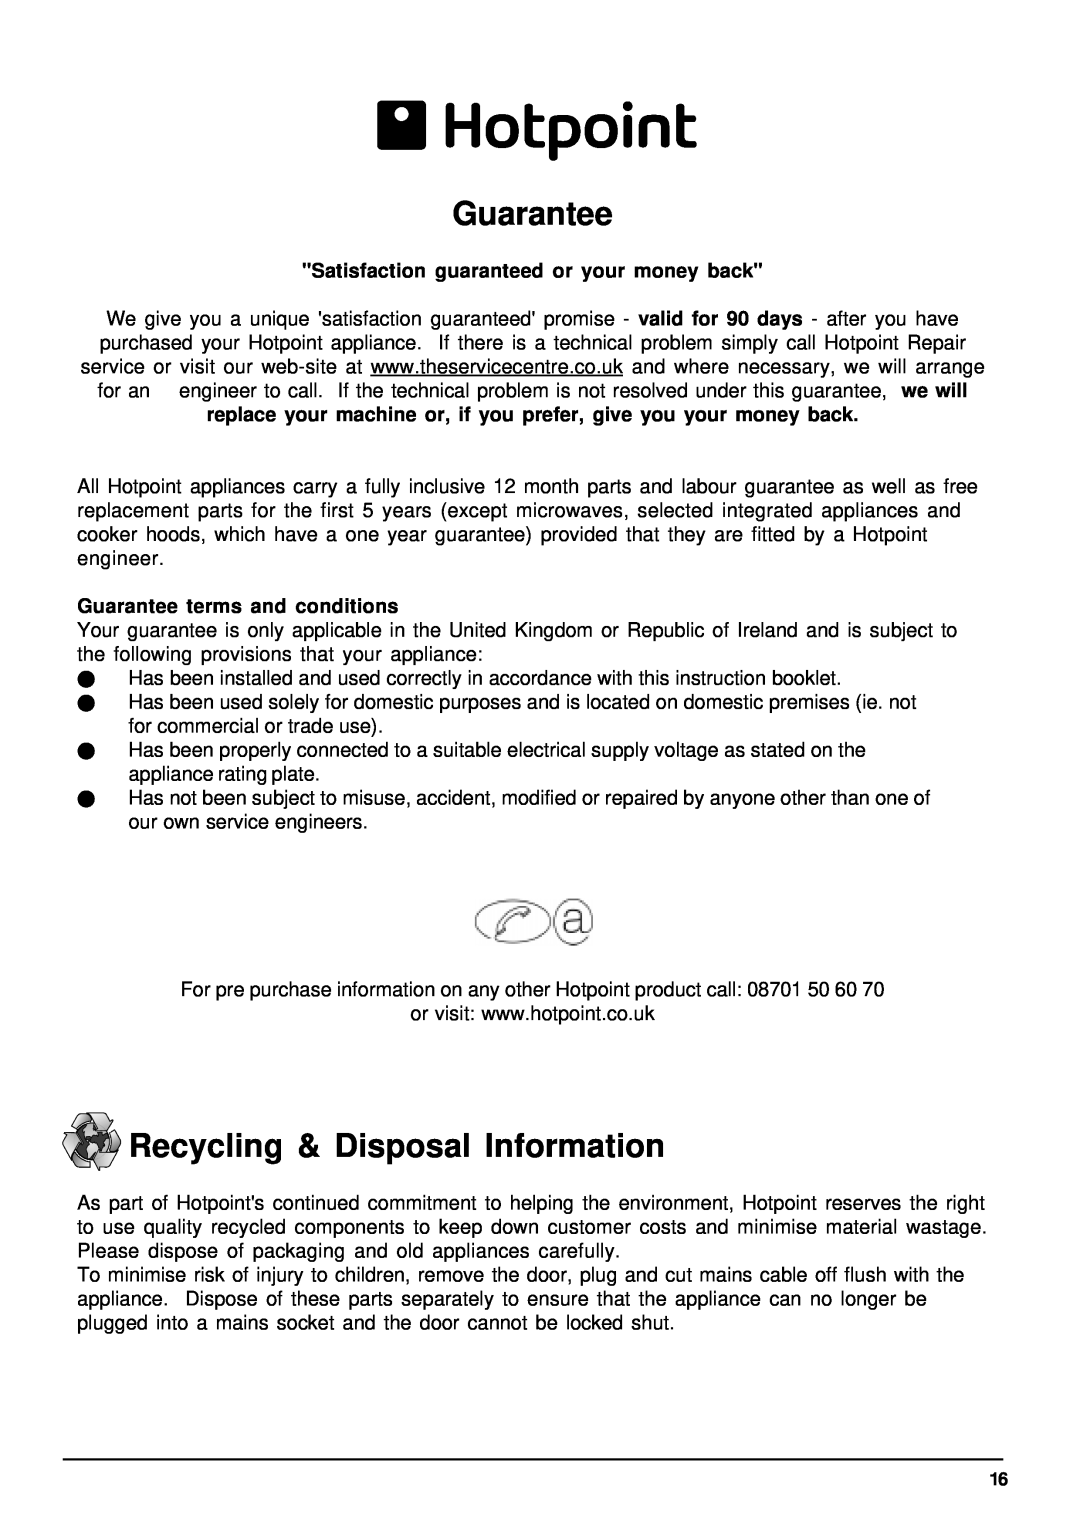 Hotpoint BFI 680 manual Guarantee, Recycling & Disposal Information, Satisfaction guaranteed or your money back 